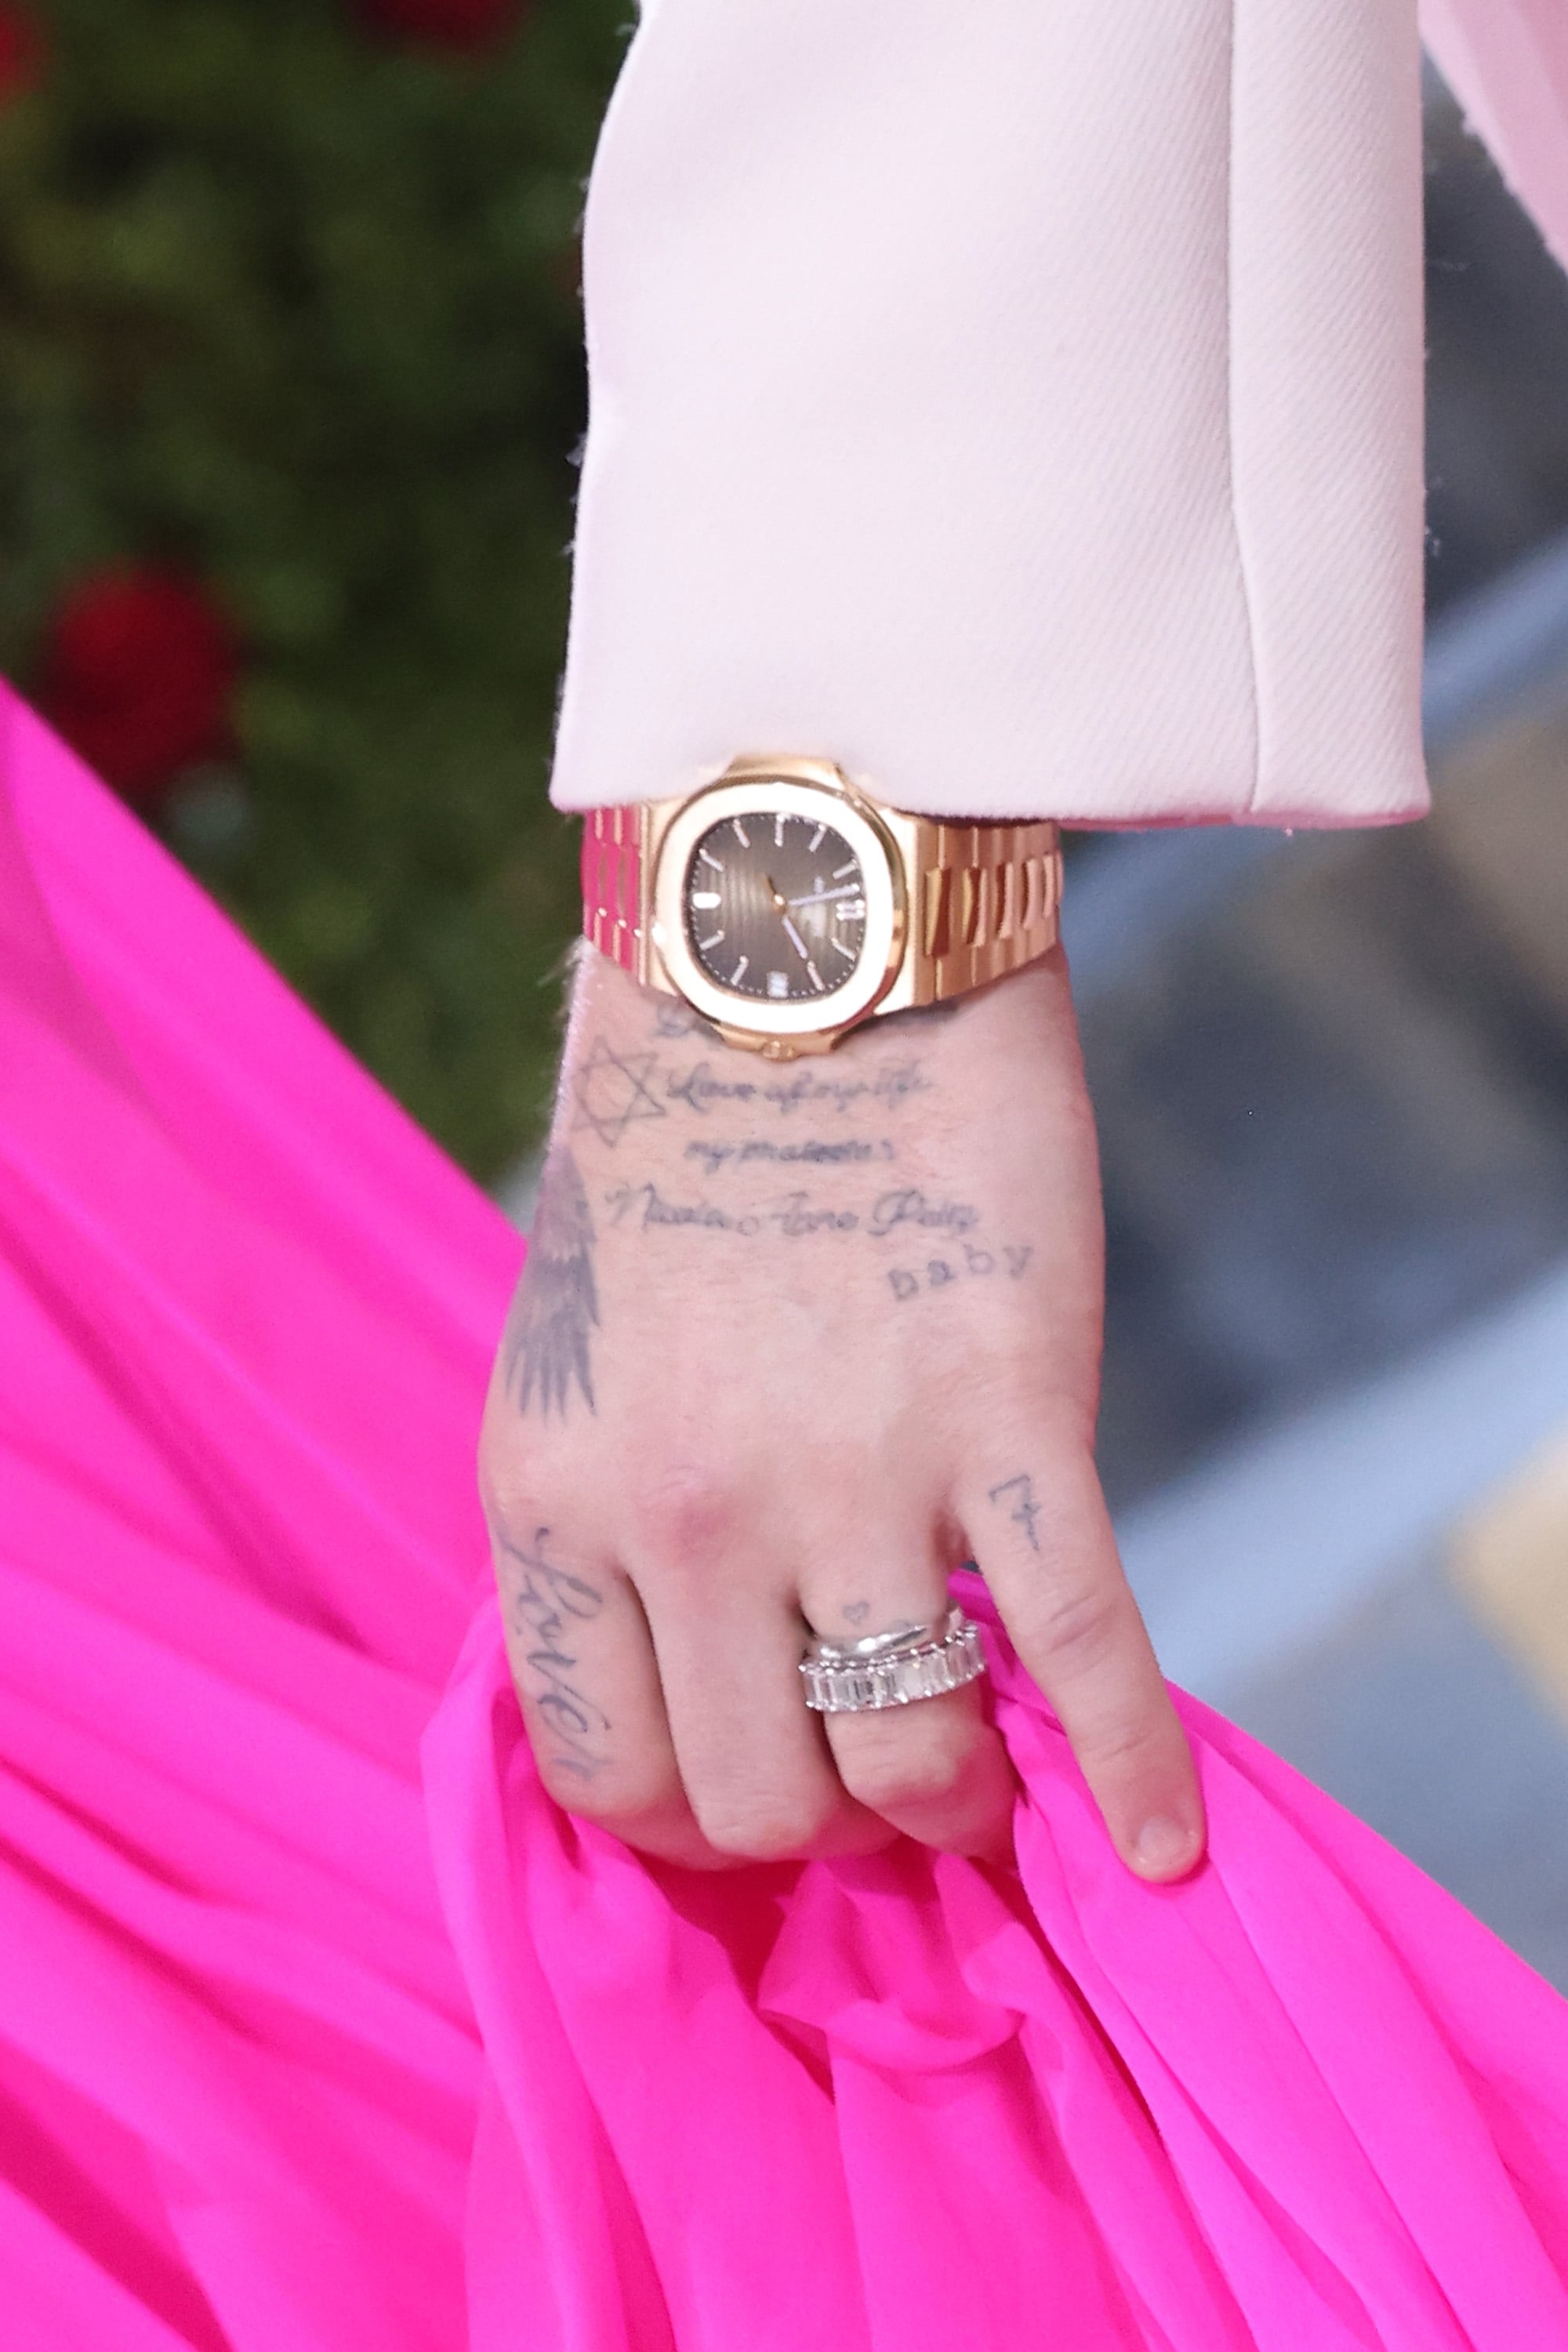 Is Brooklyn Beckham Wearing a Wedding Ring? Brooklyn Beckham Married